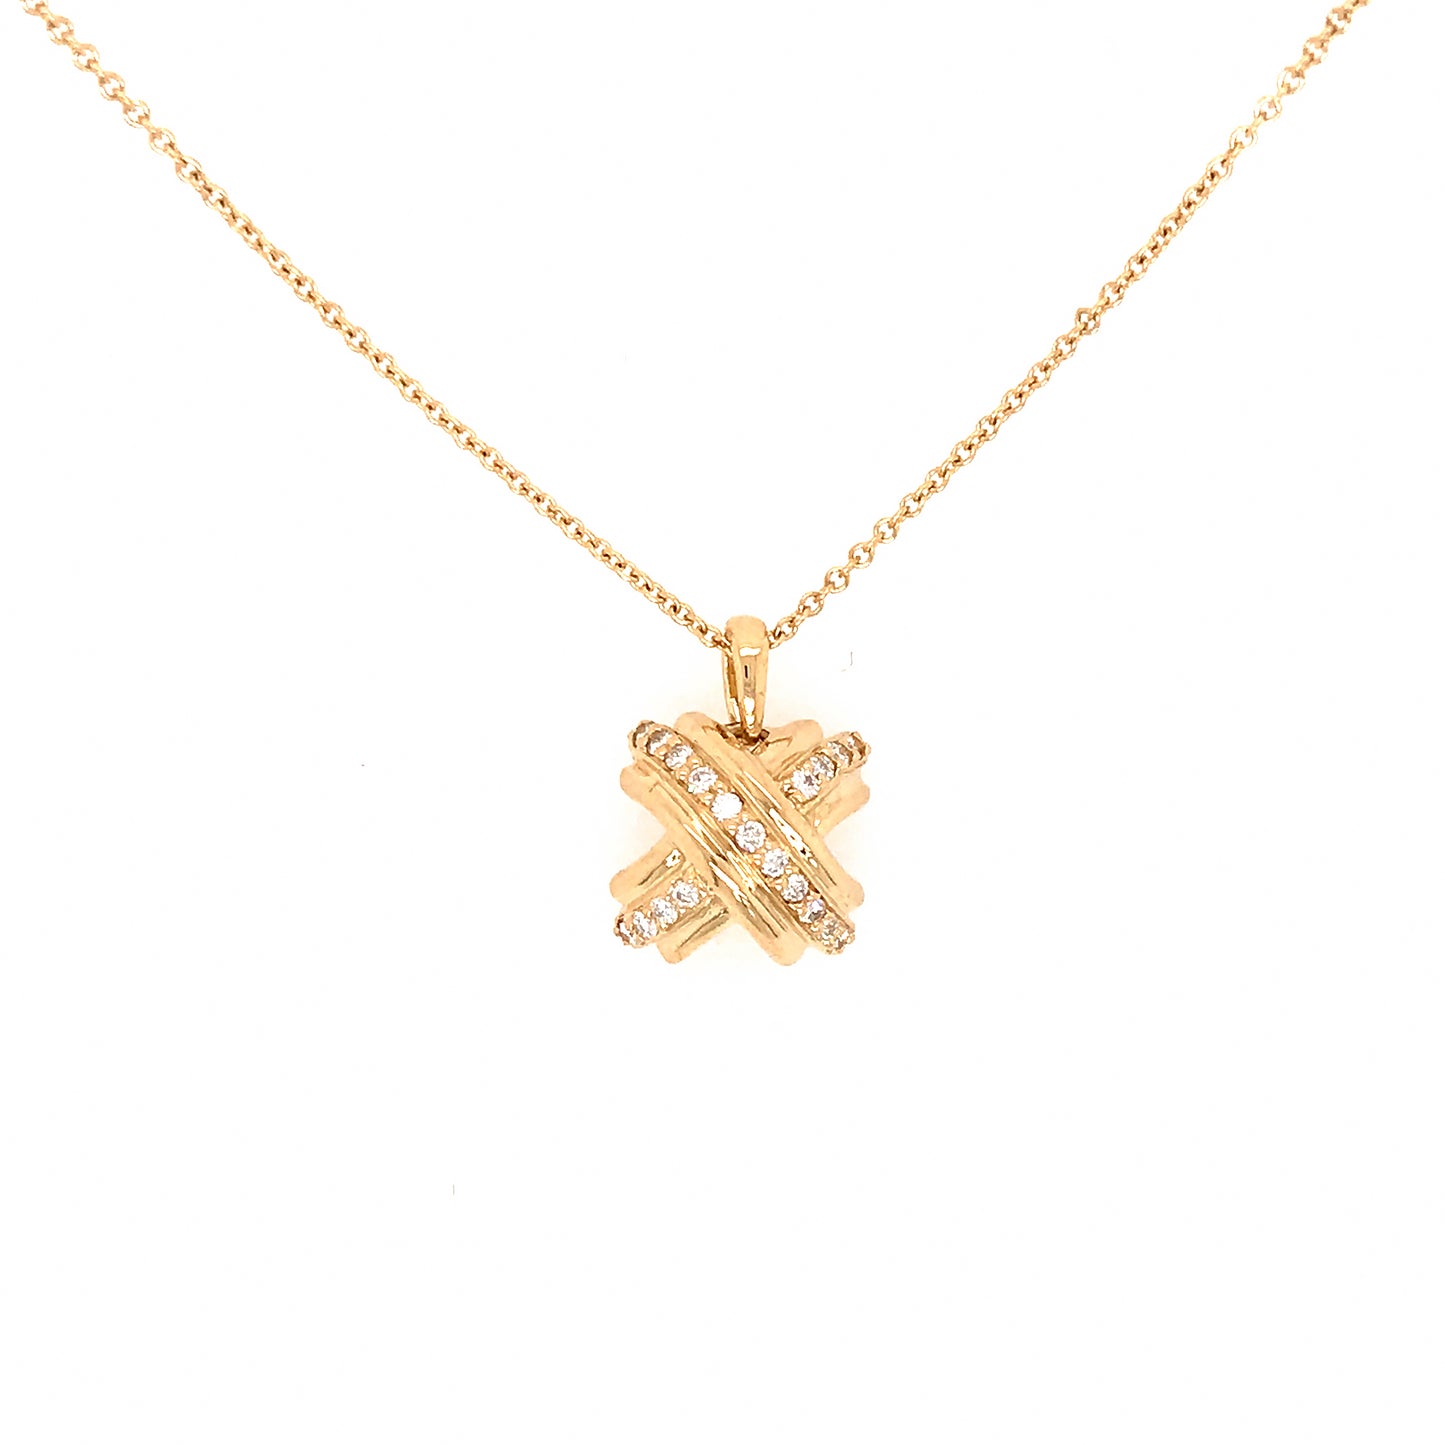 Tiffany and Co. Signature X Diamond Necklace